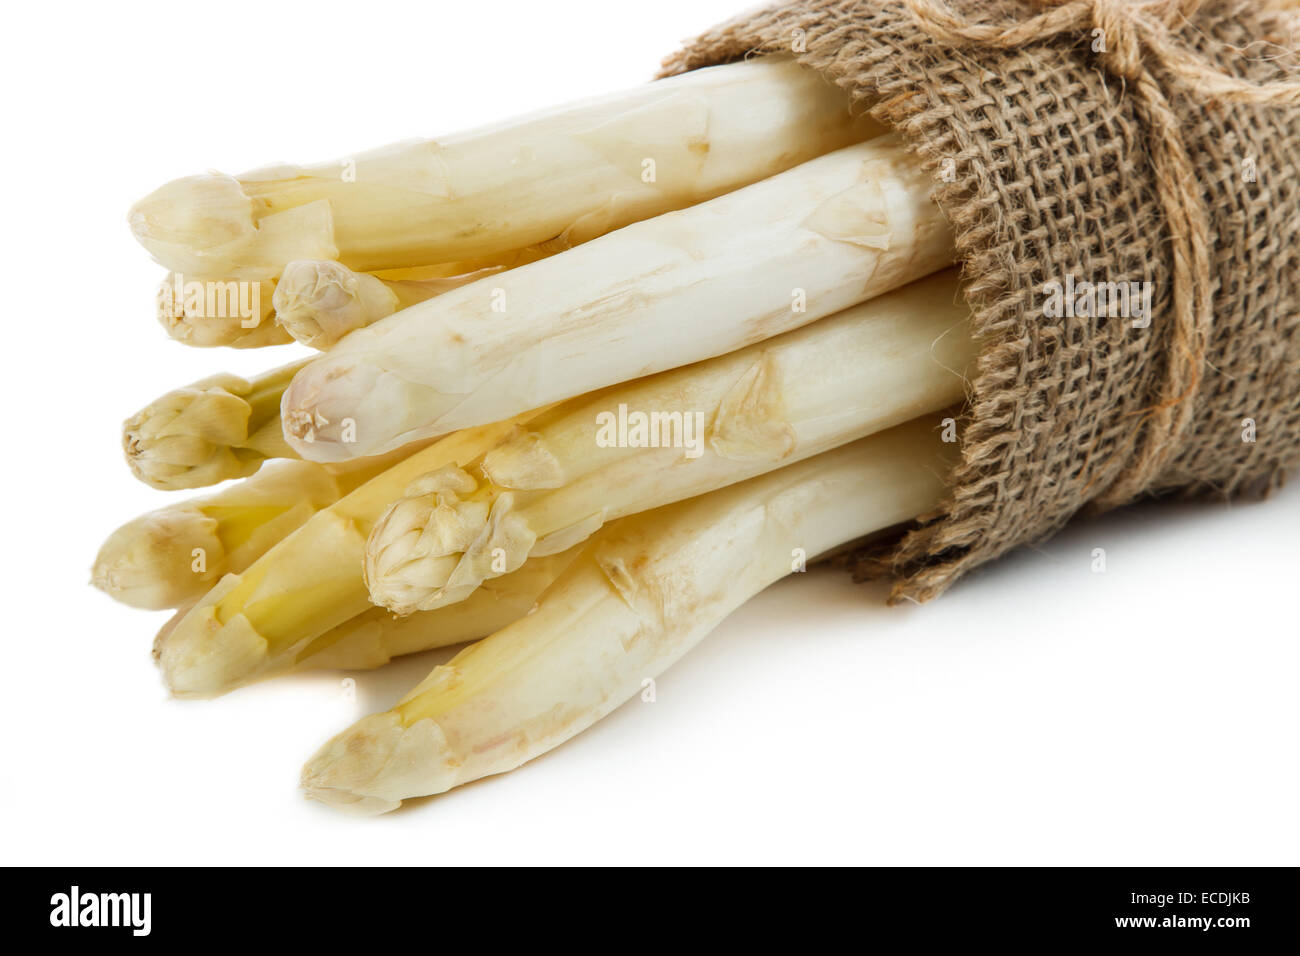 White asparagus on bright background Stock Photo